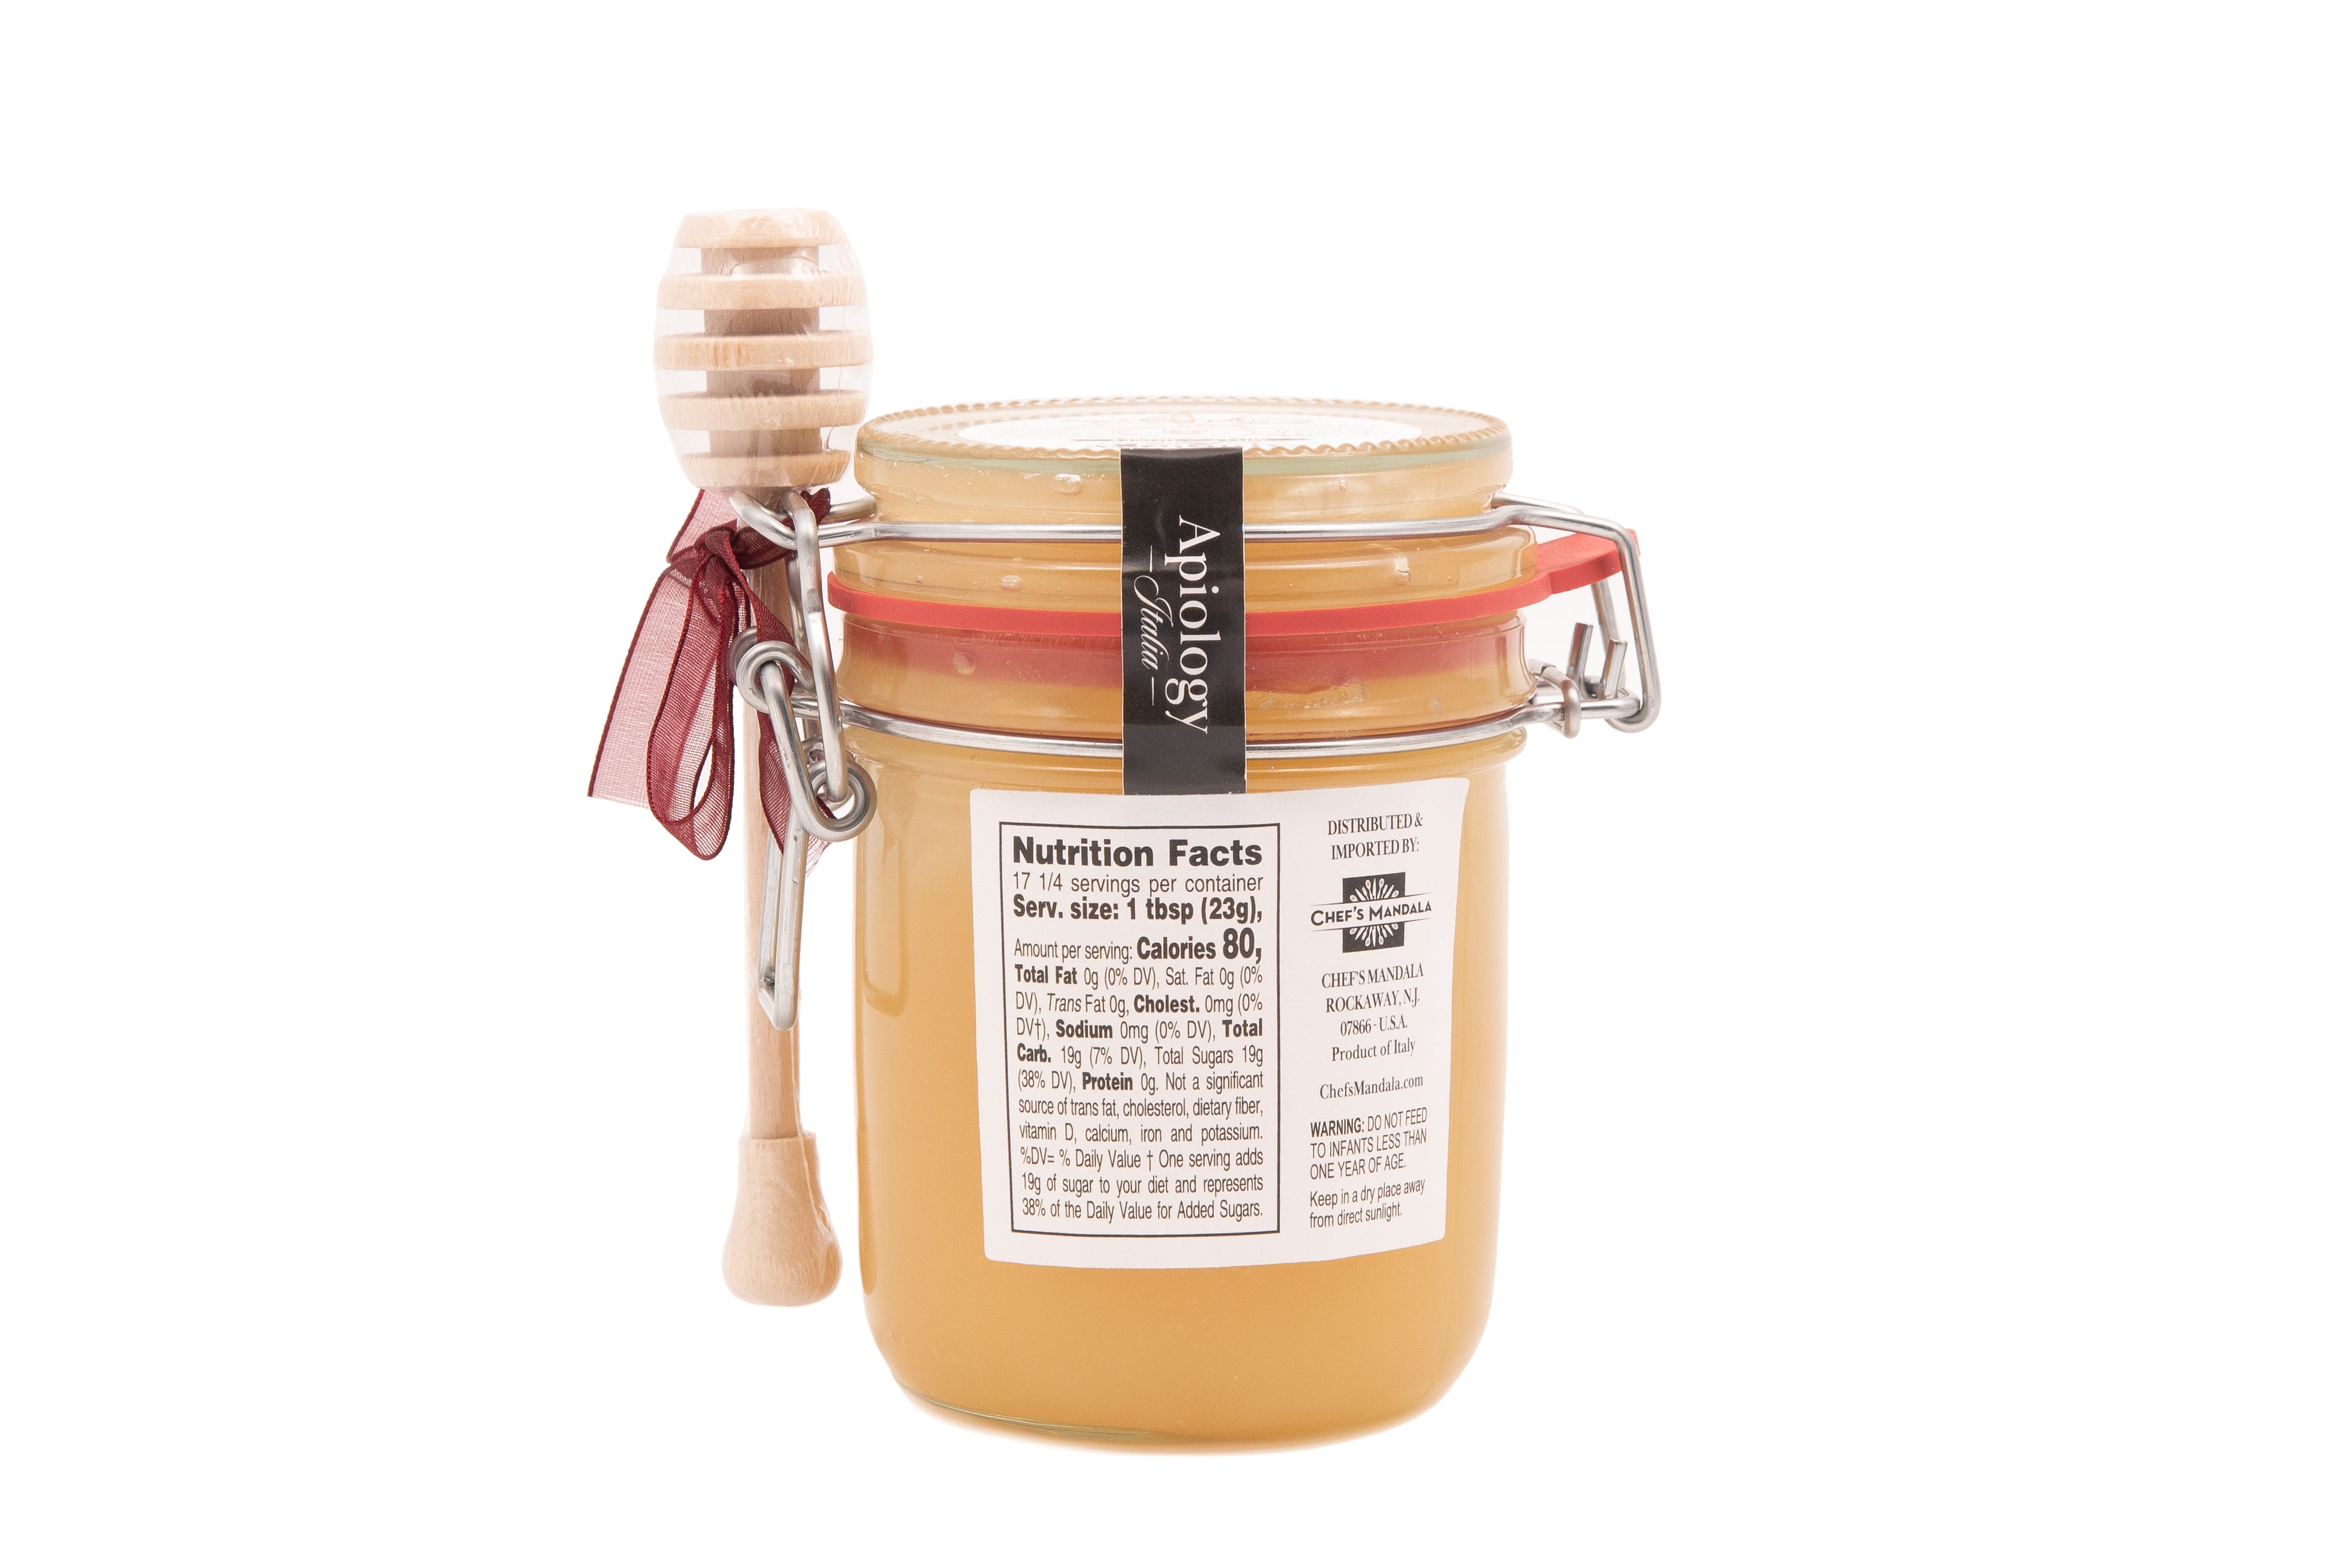 Apiology - Orange Honey 14.1 oz